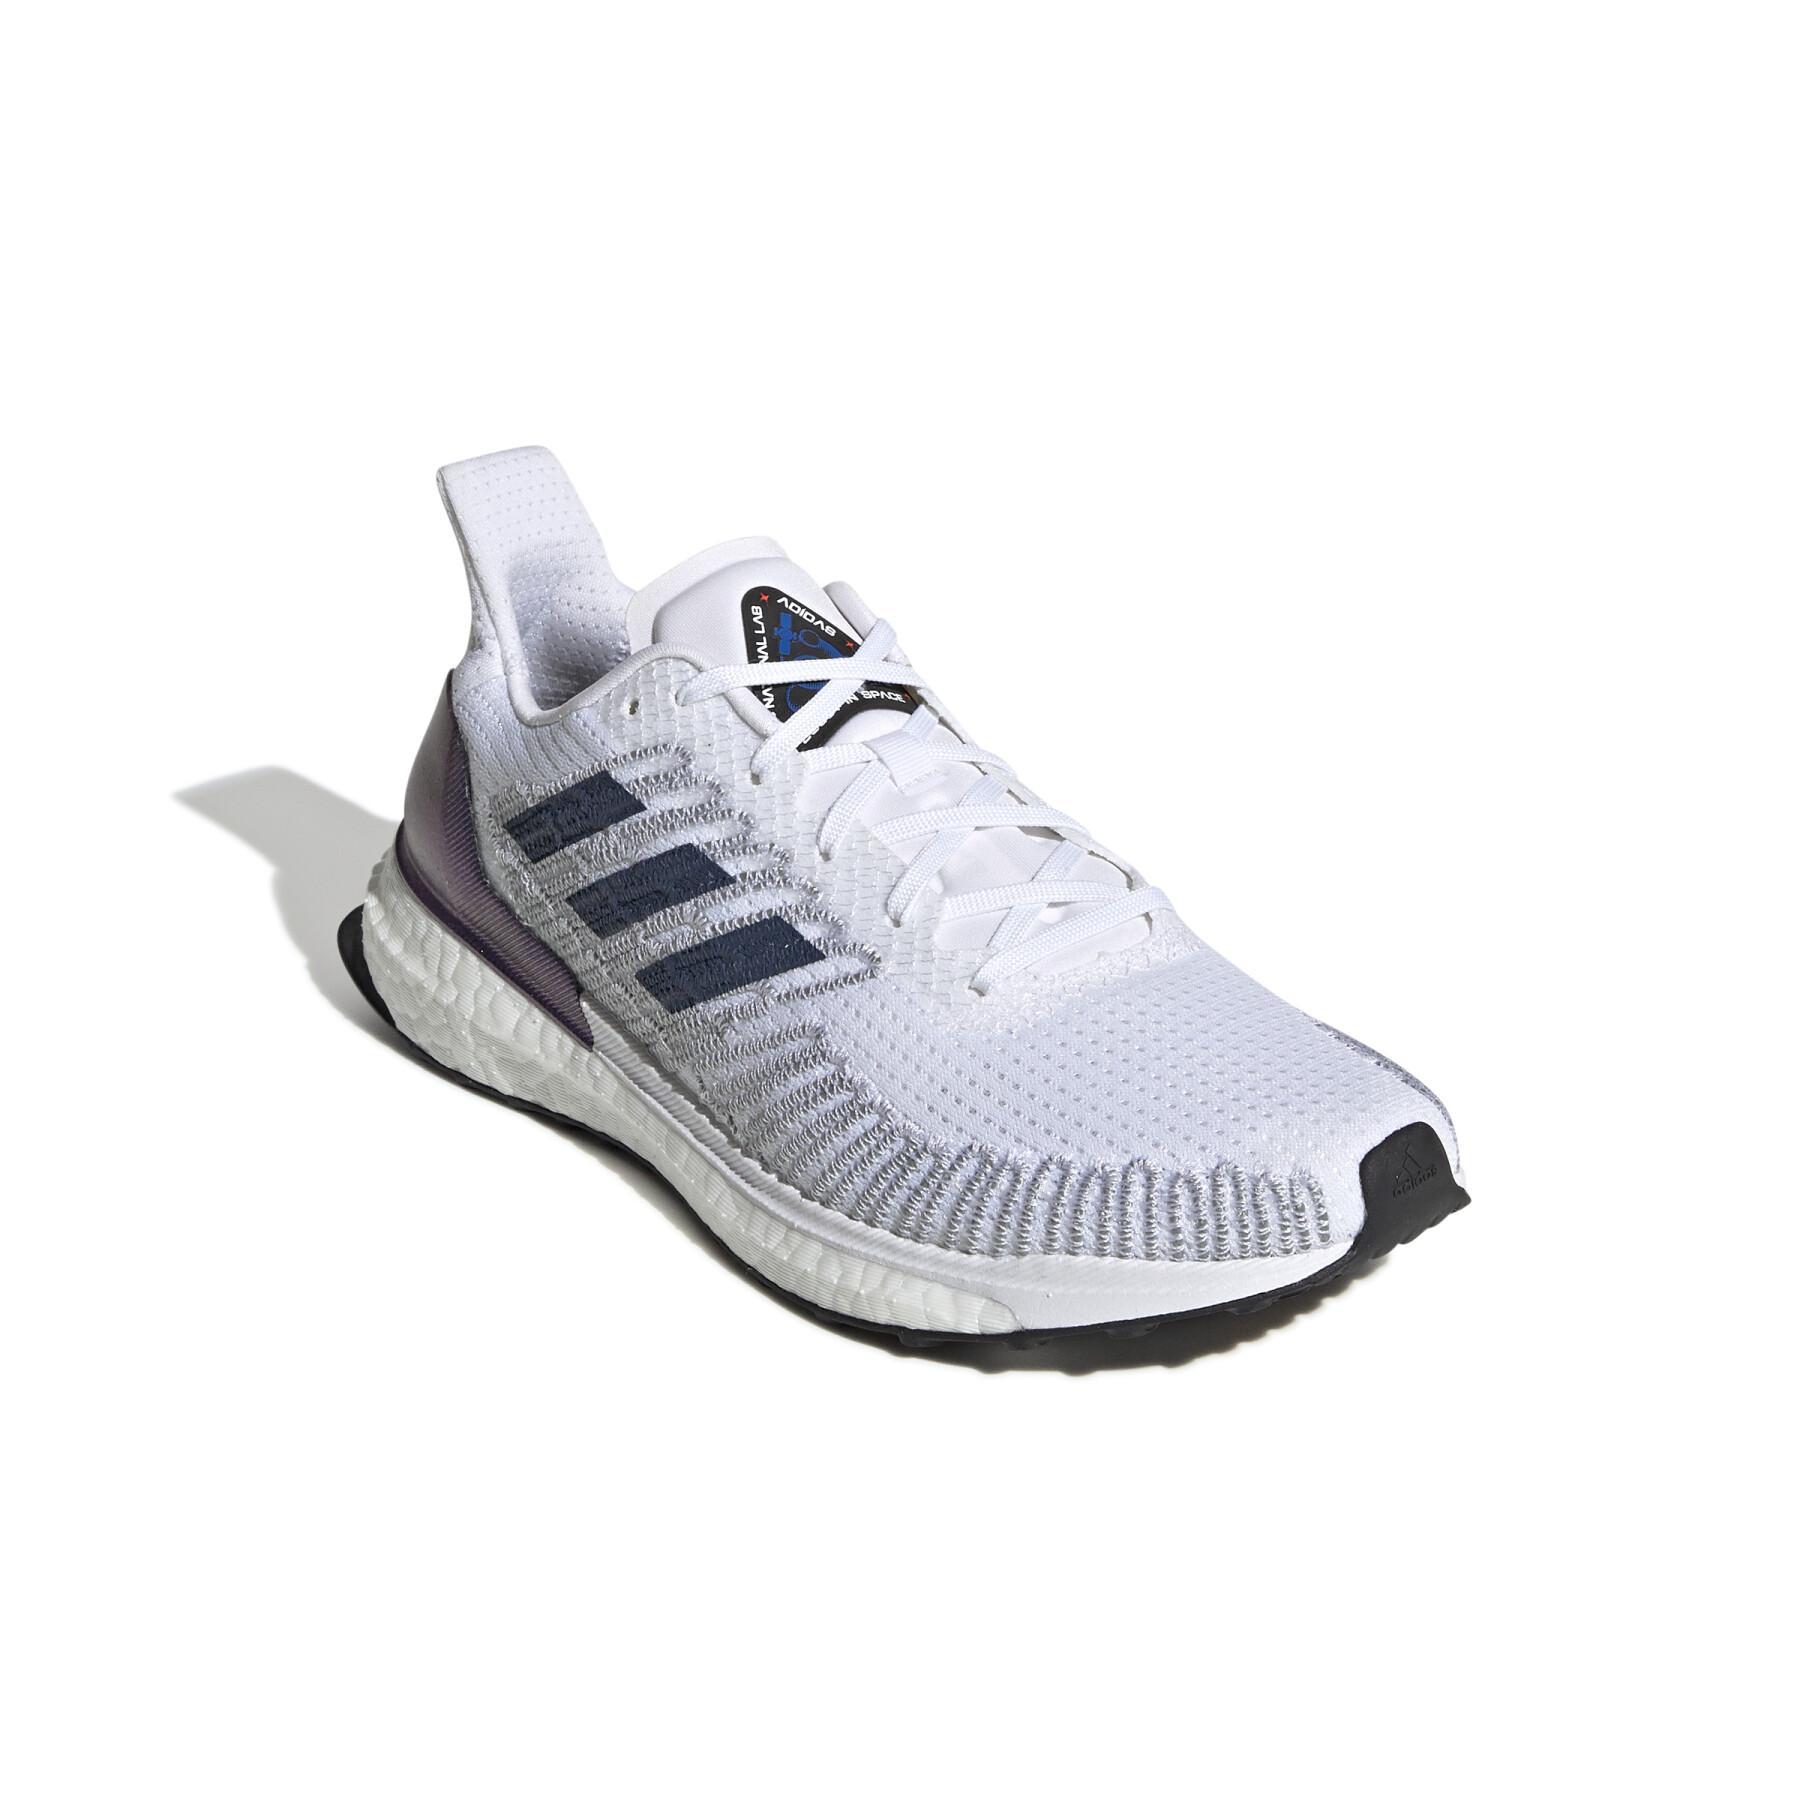 Chaussures de running femme adidas Solarboost ST 19